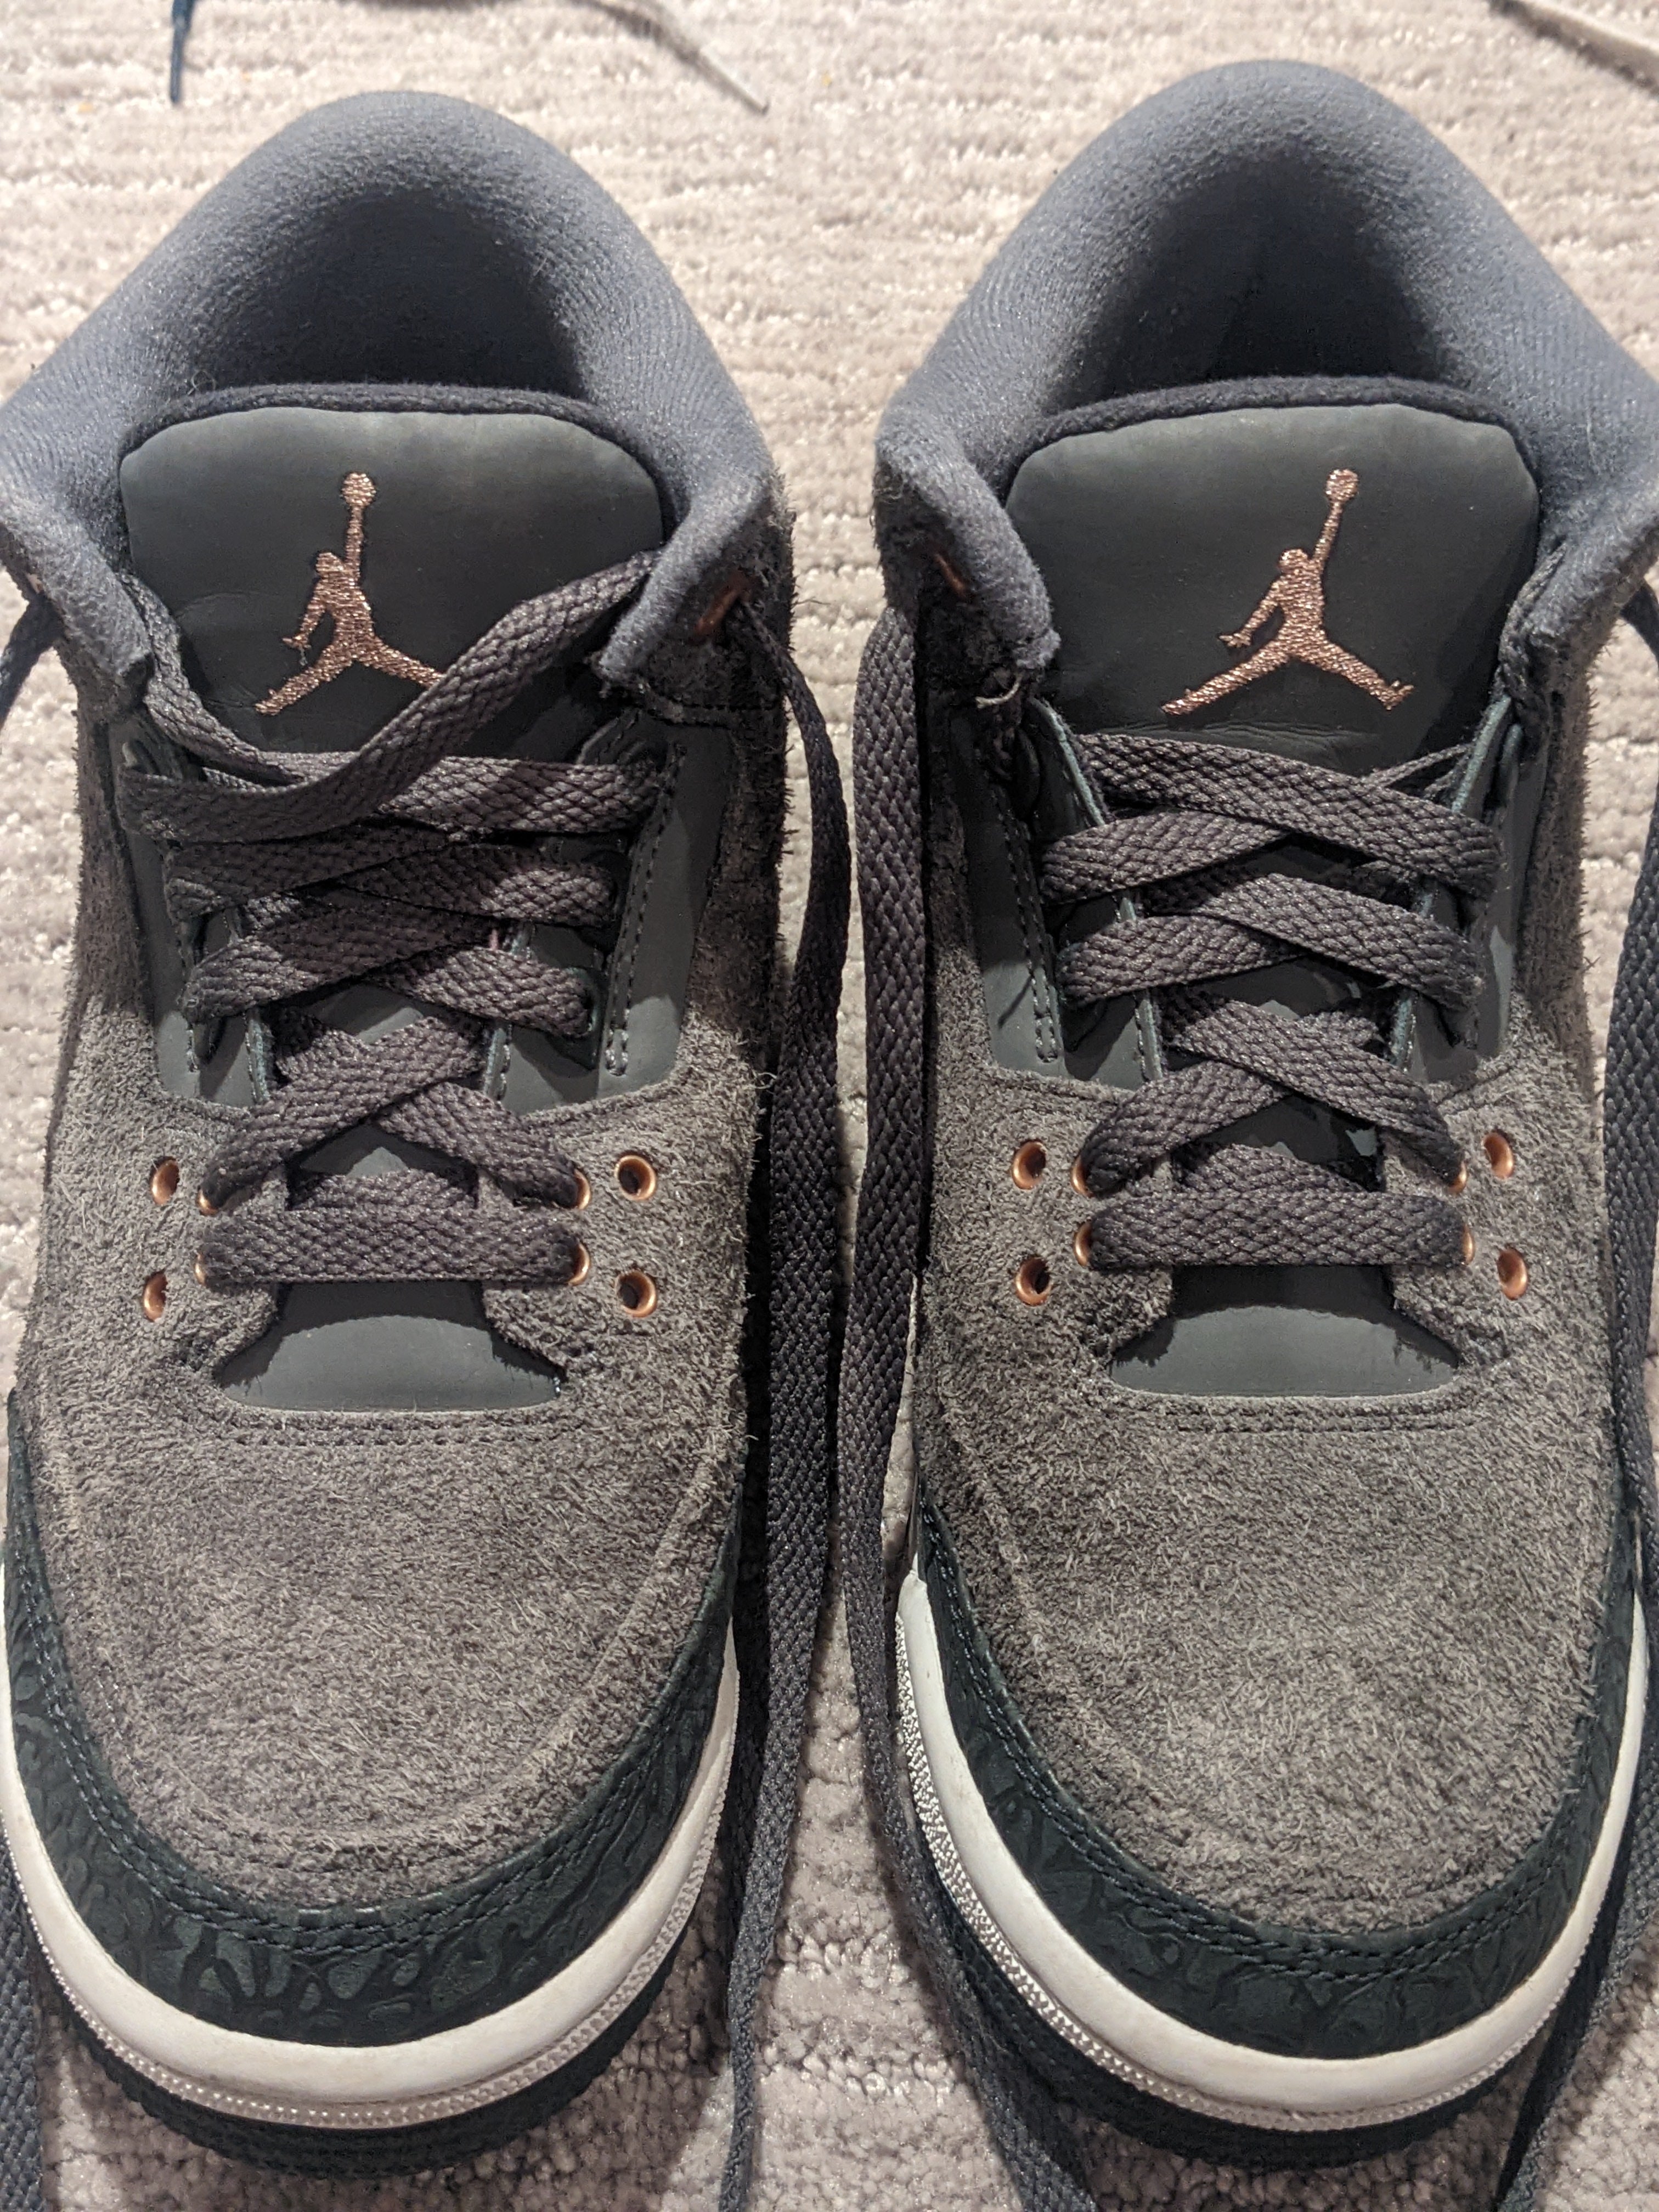 air jordan shoes size 5.5